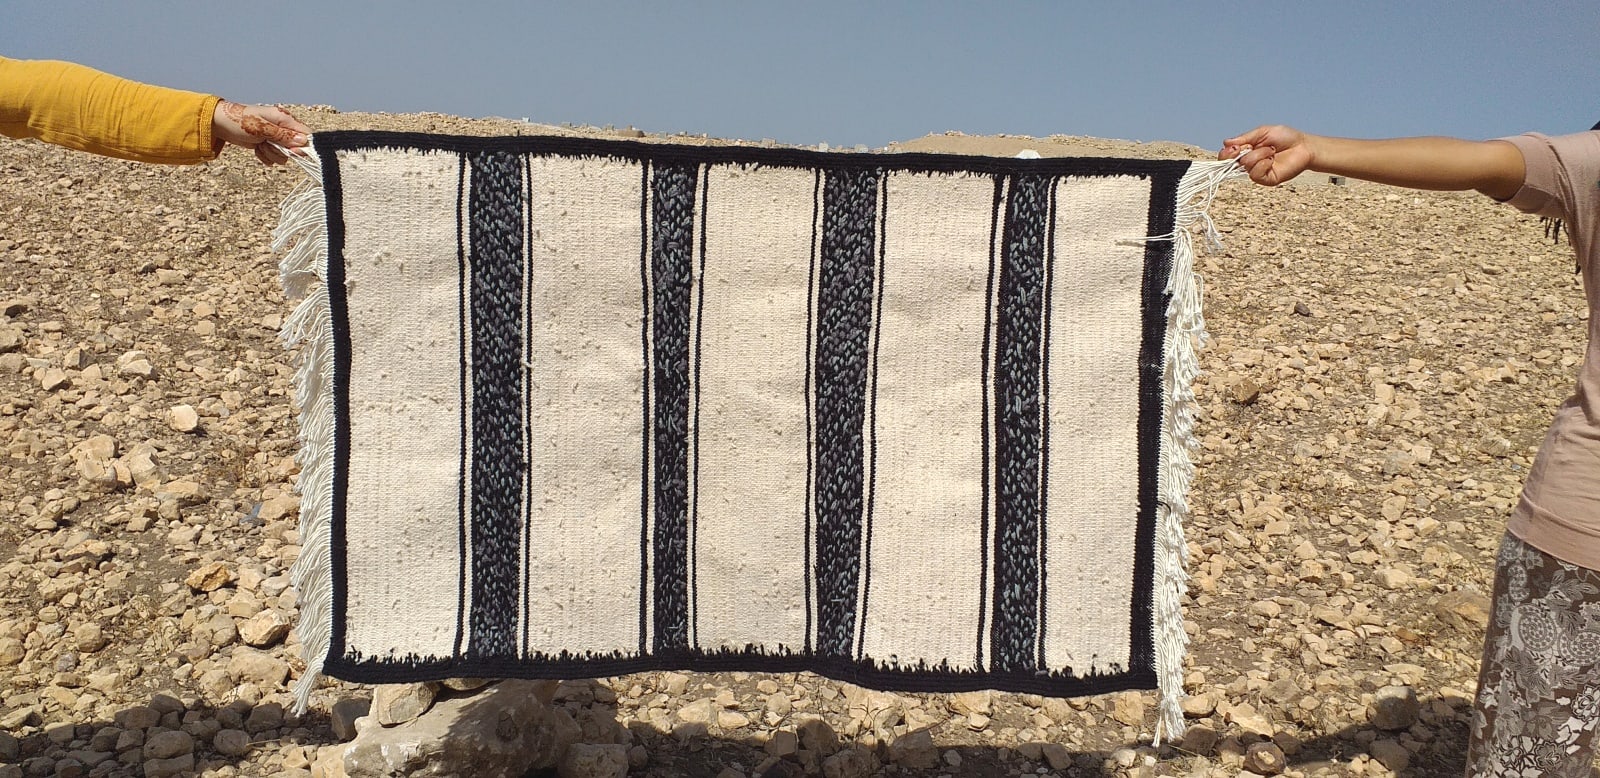  Kantorian Carpet  Sedda  Grey, Black Morocco